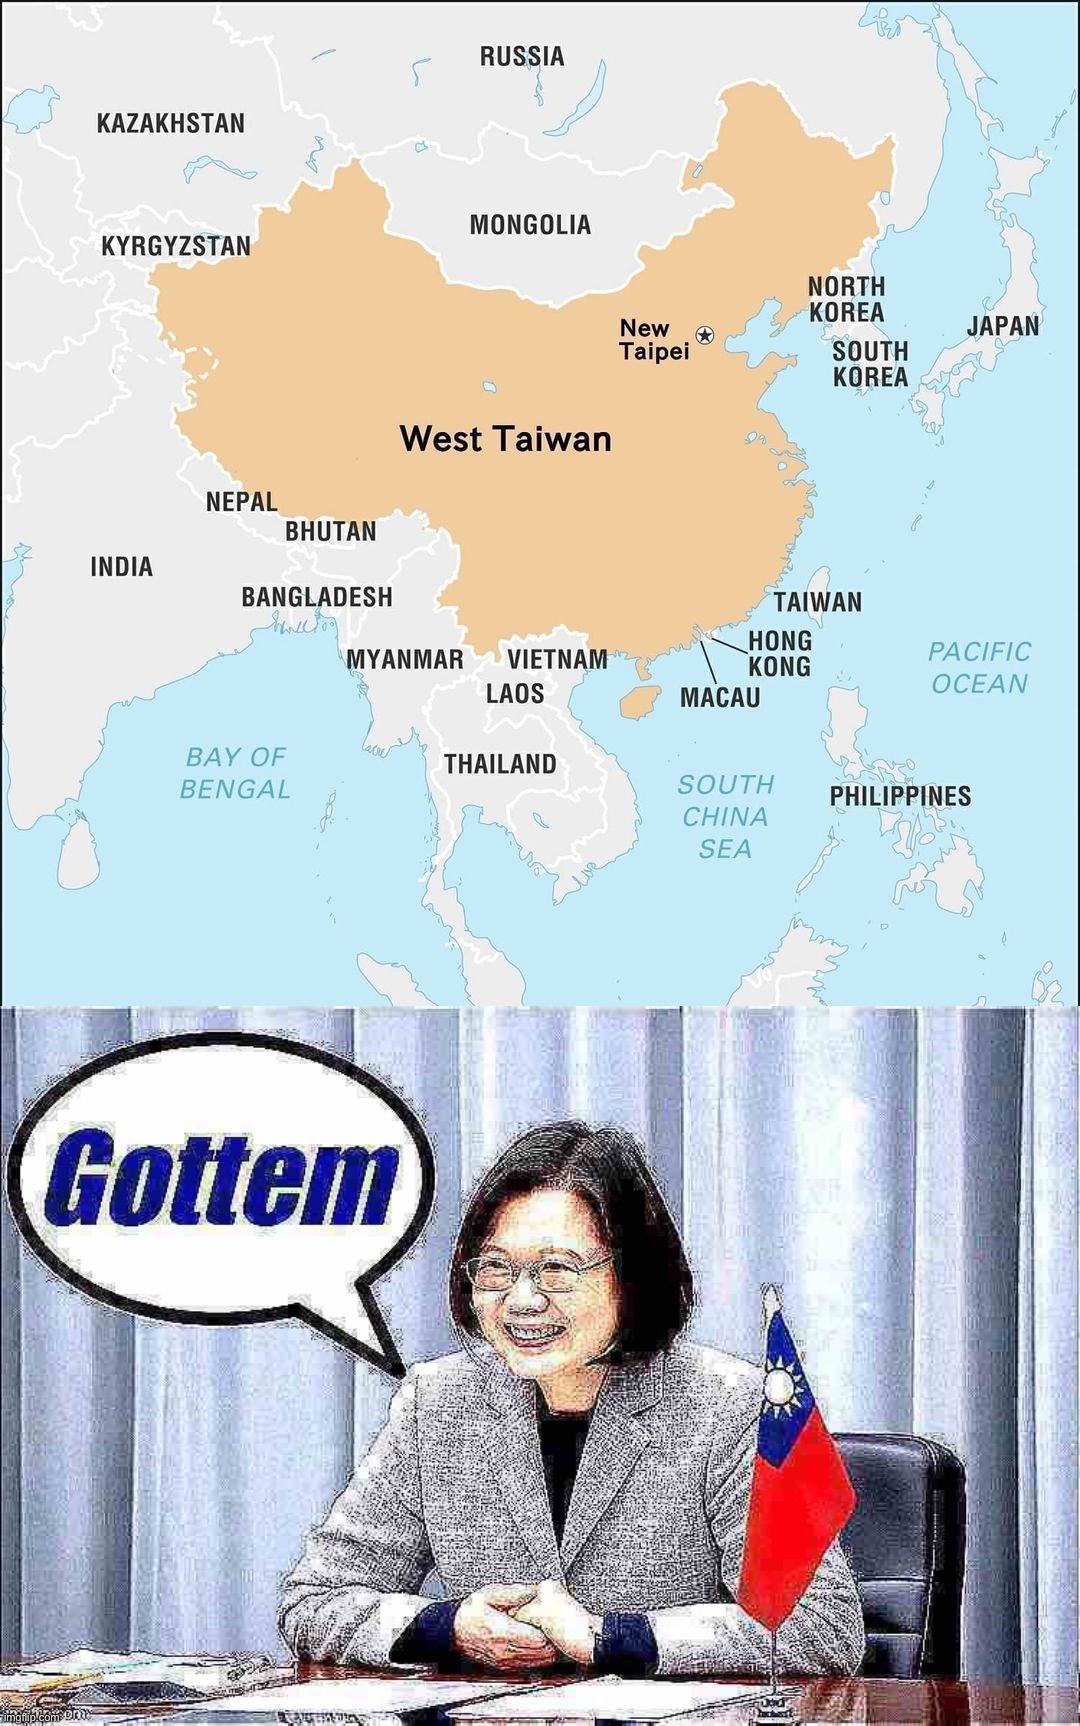 image tagged in west taiwan,tsai ing-wen gottem deep-fried | made w/ Imgflip meme maker